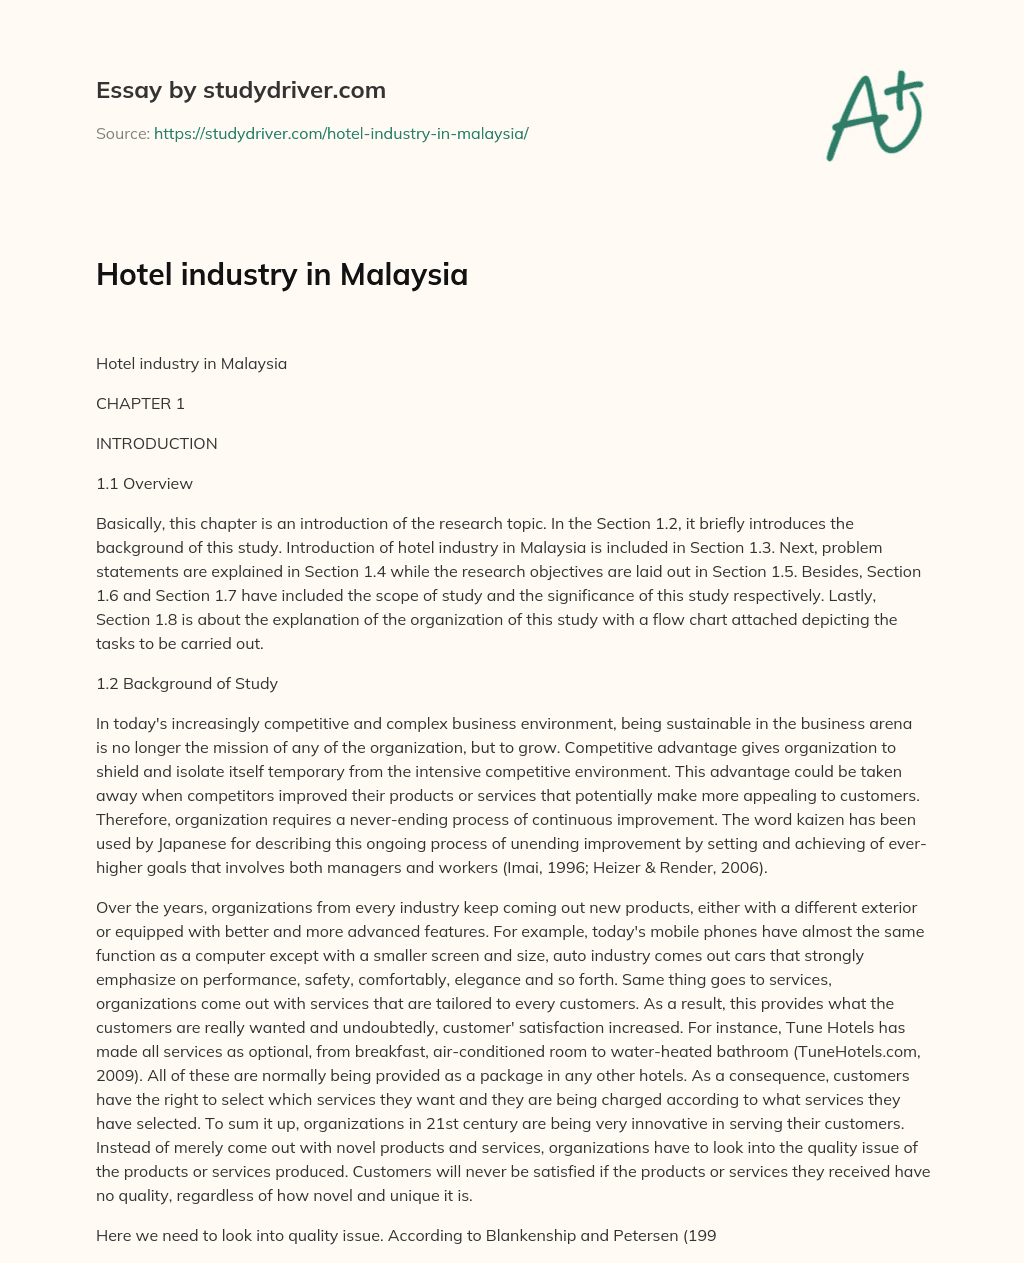 Hotel Industry in Malaysia essay